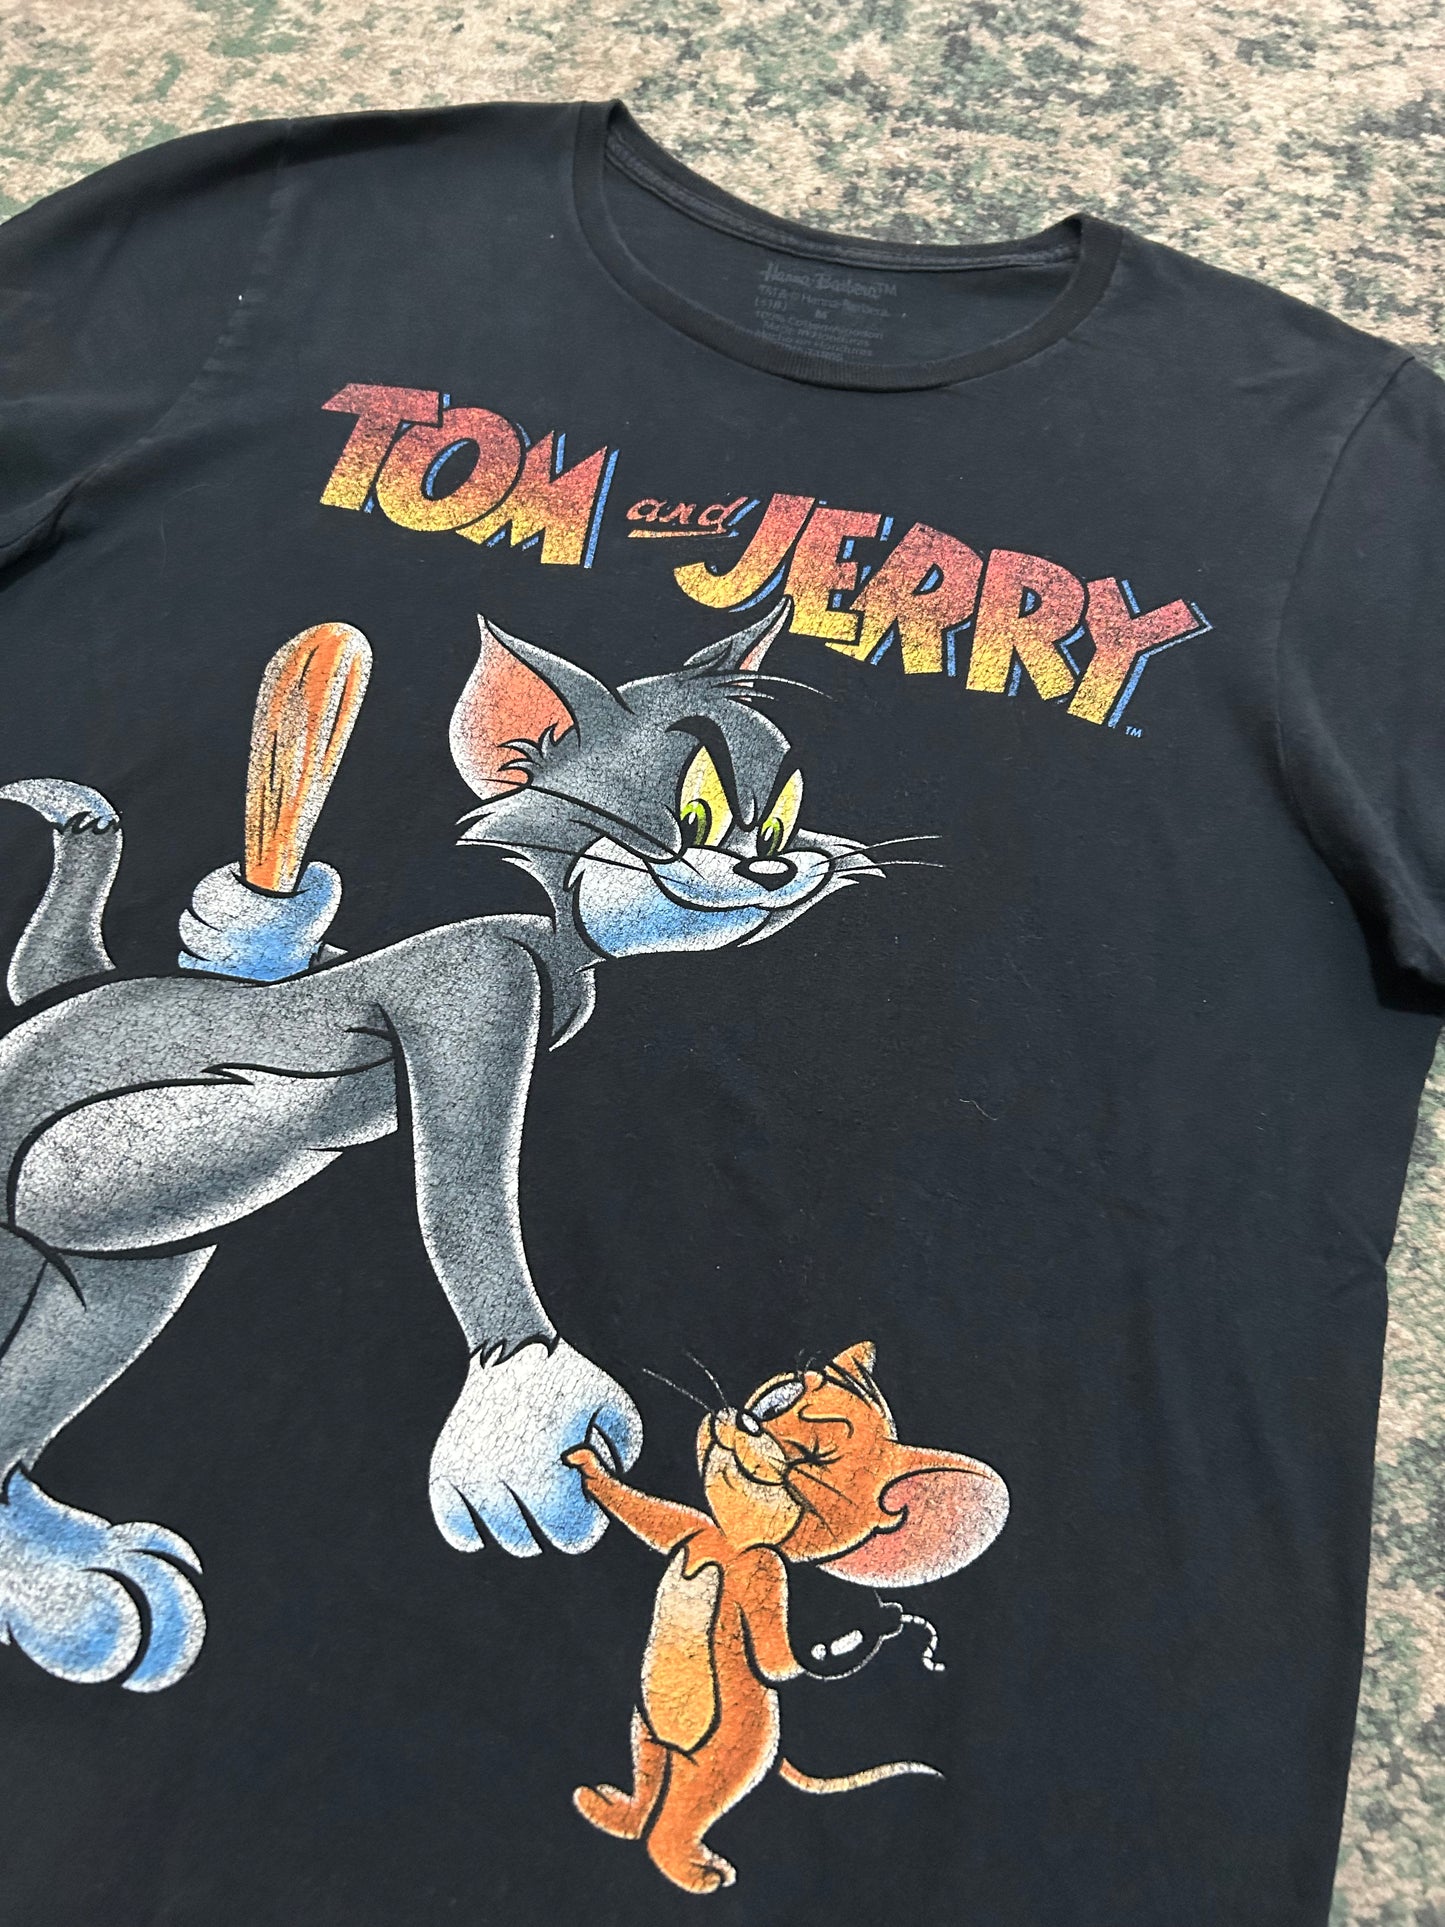 Tom & Jerry - 1997 tee